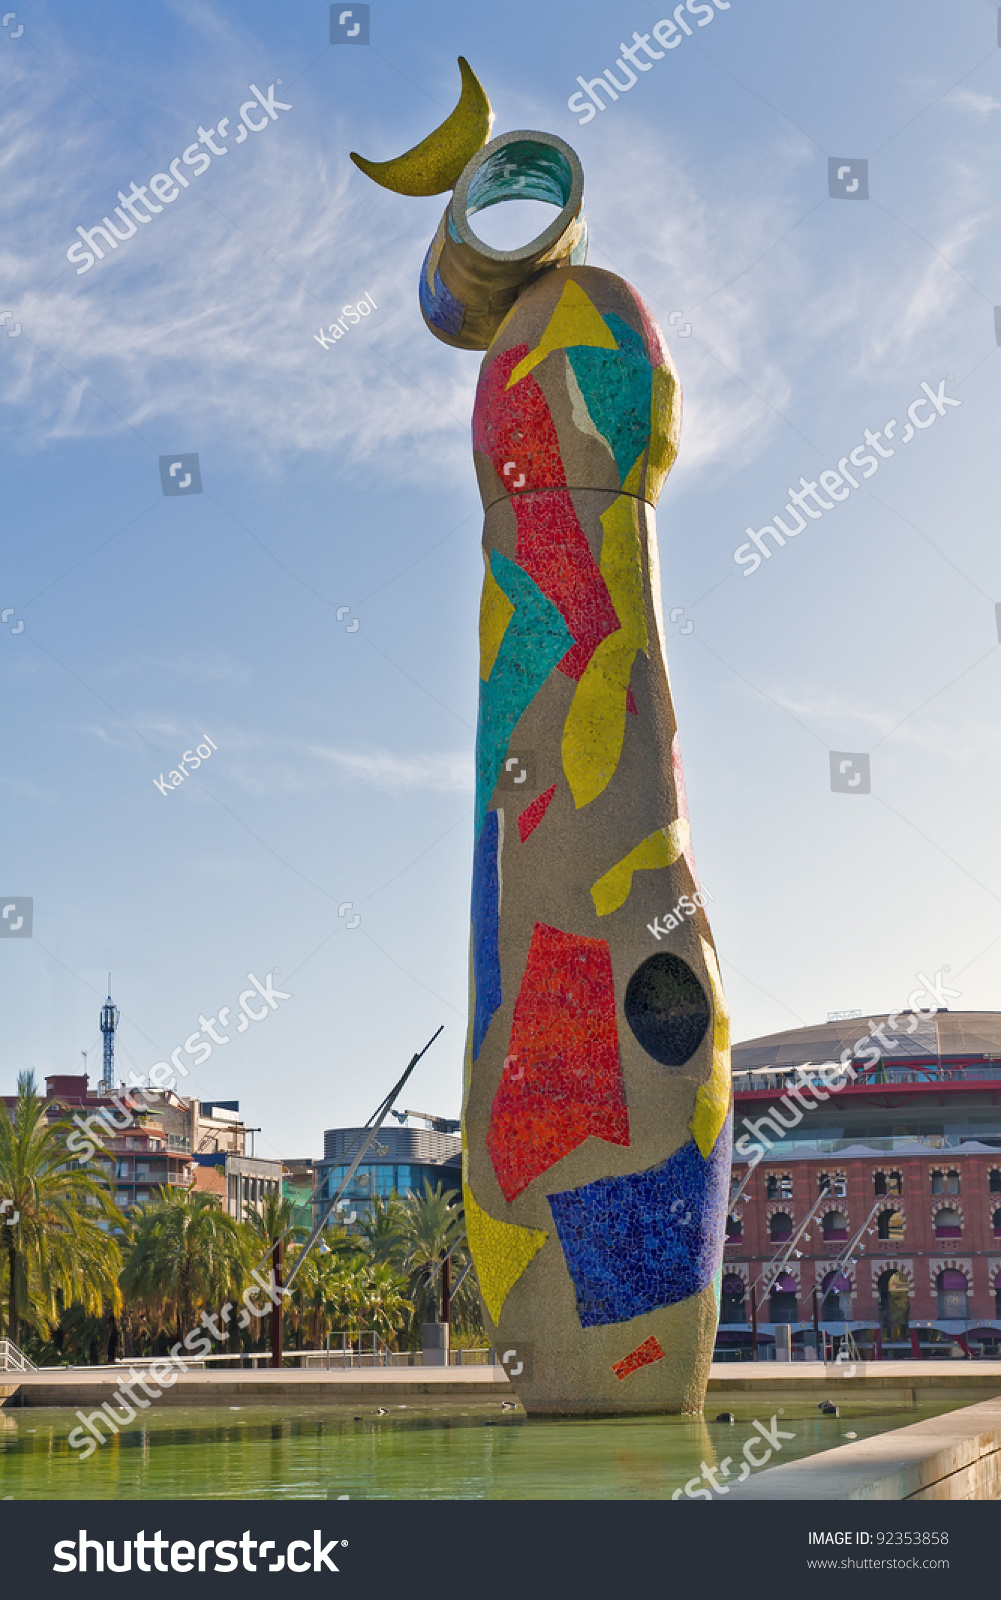 Barcelona January 8 Statue Woman Bird Stock Photo 92353858 - Shutterstock